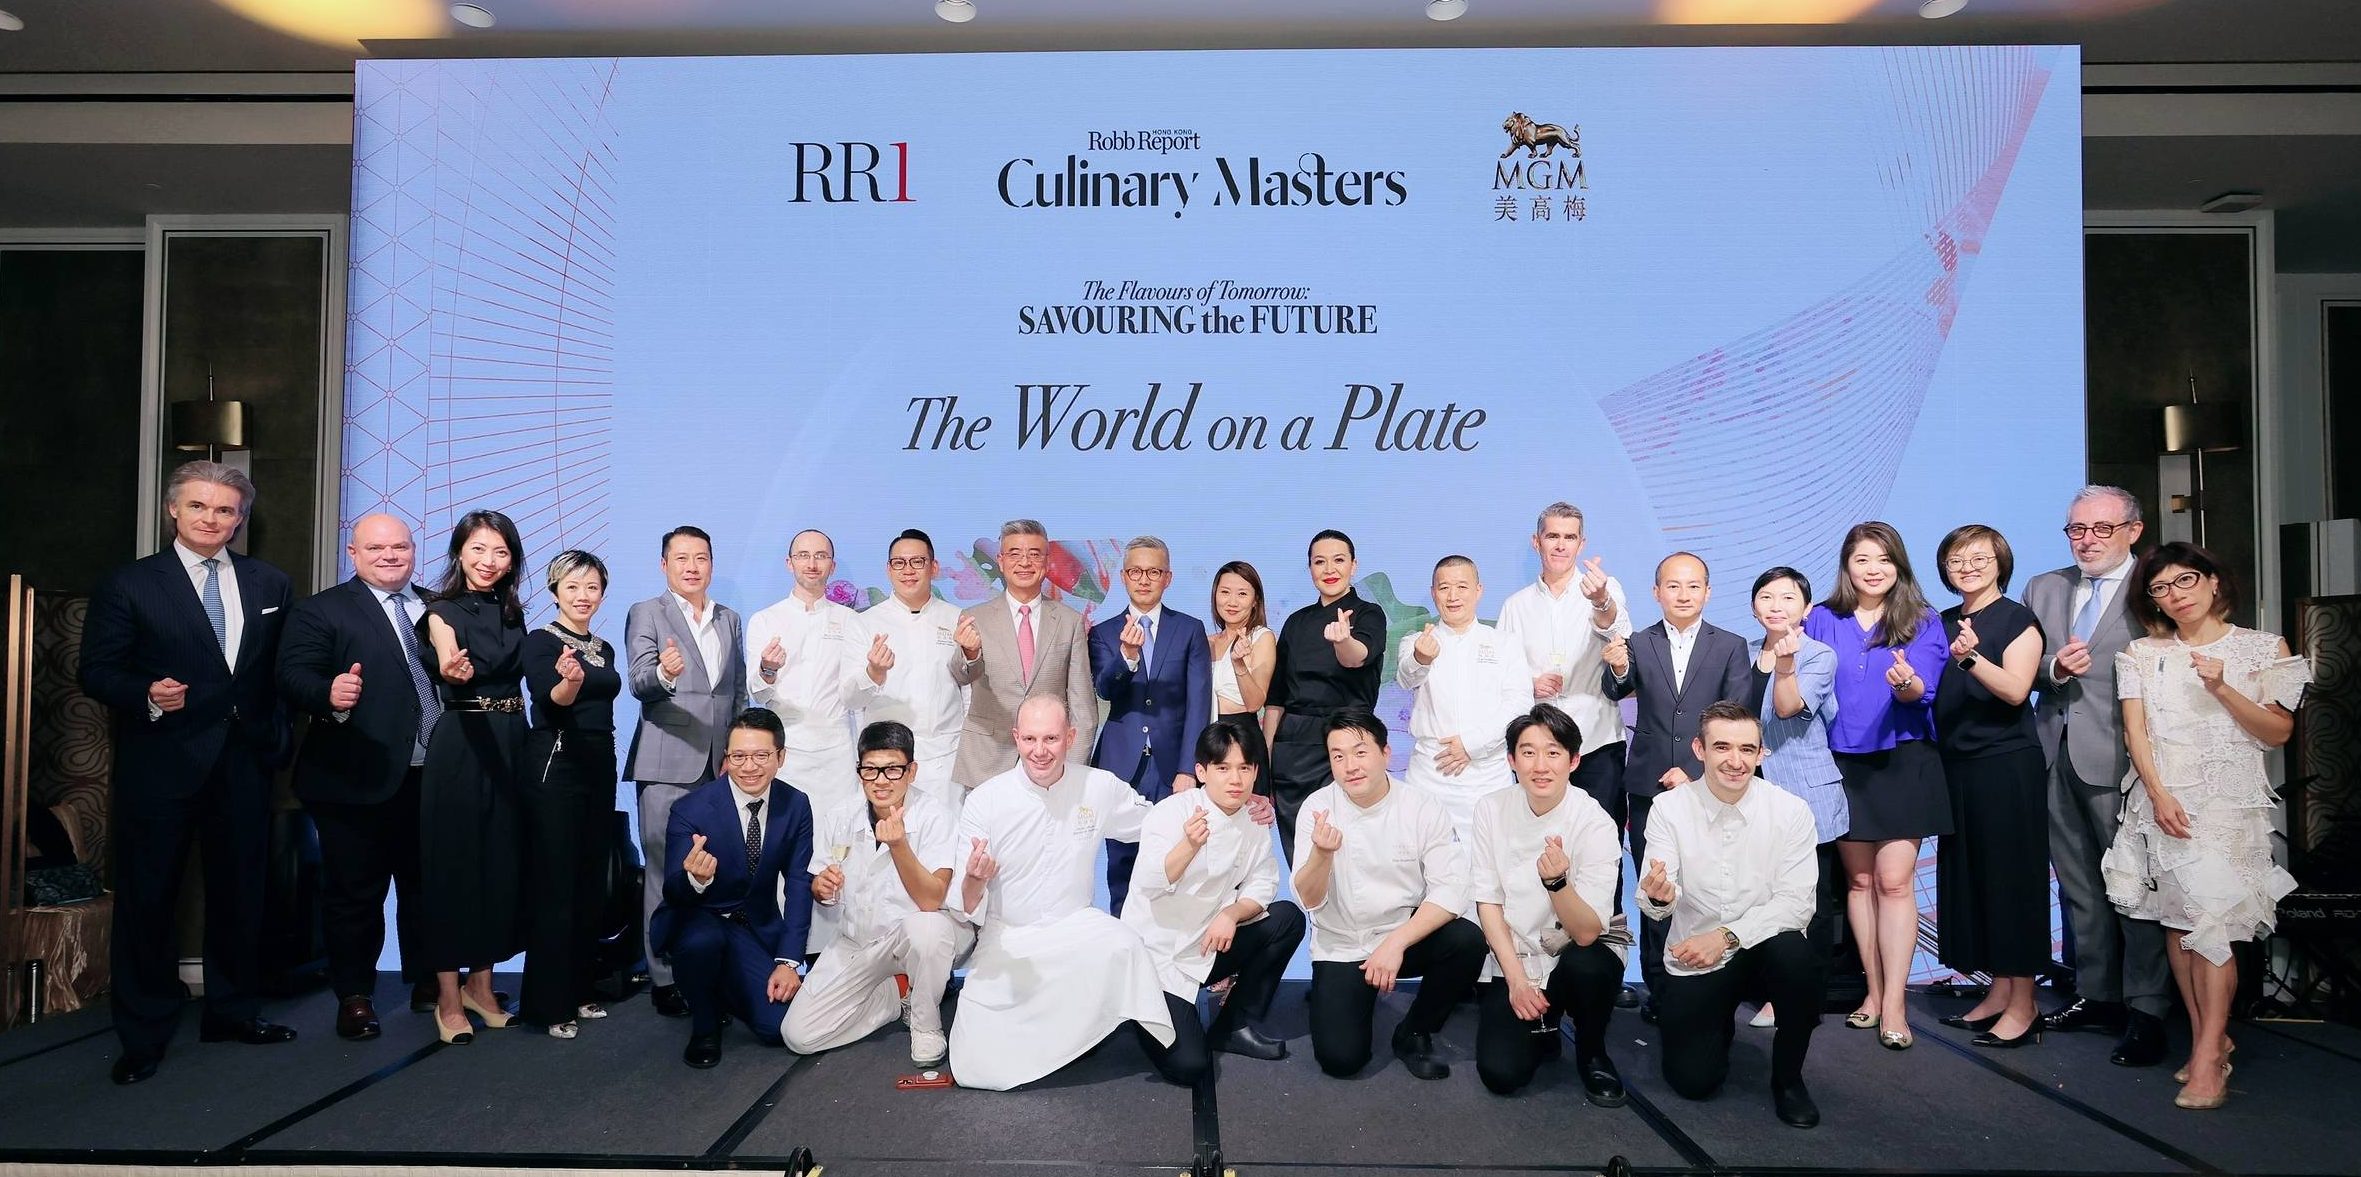 MGM RR1 Culinary Masters MGM team